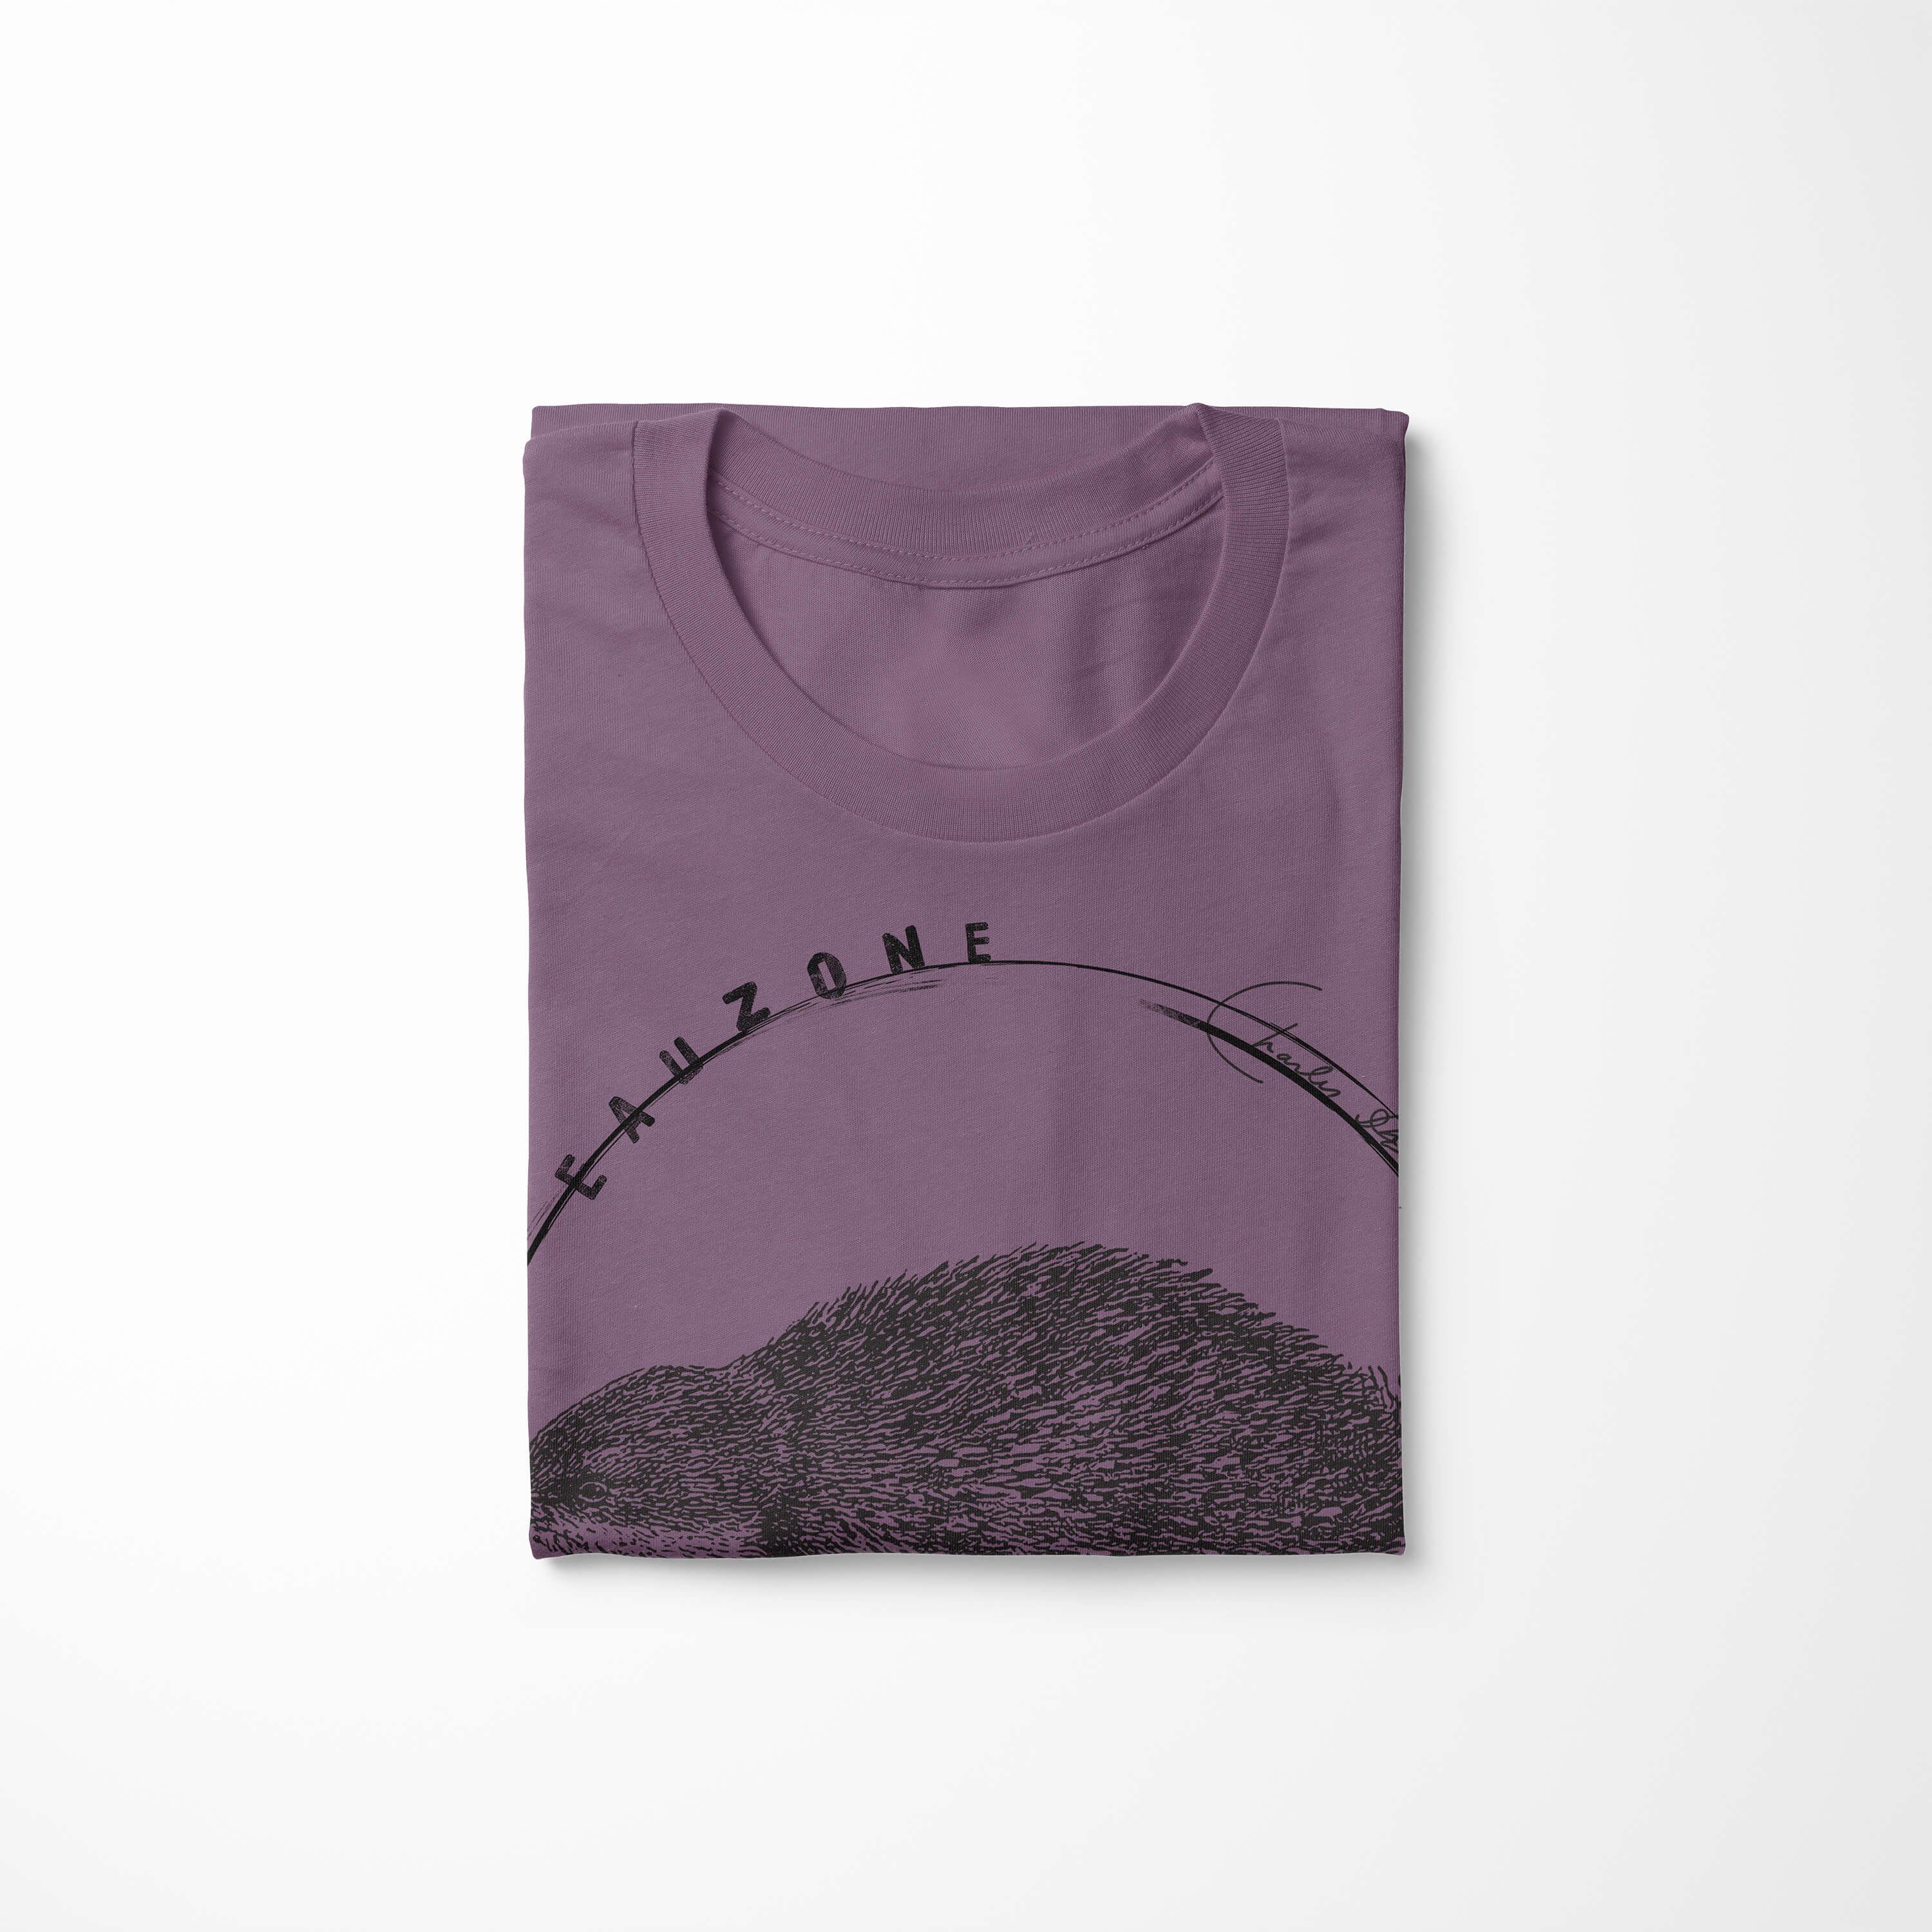 Ameisenigel Sinus T-Shirt T-Shirt Herren Art Evolution Shiraz